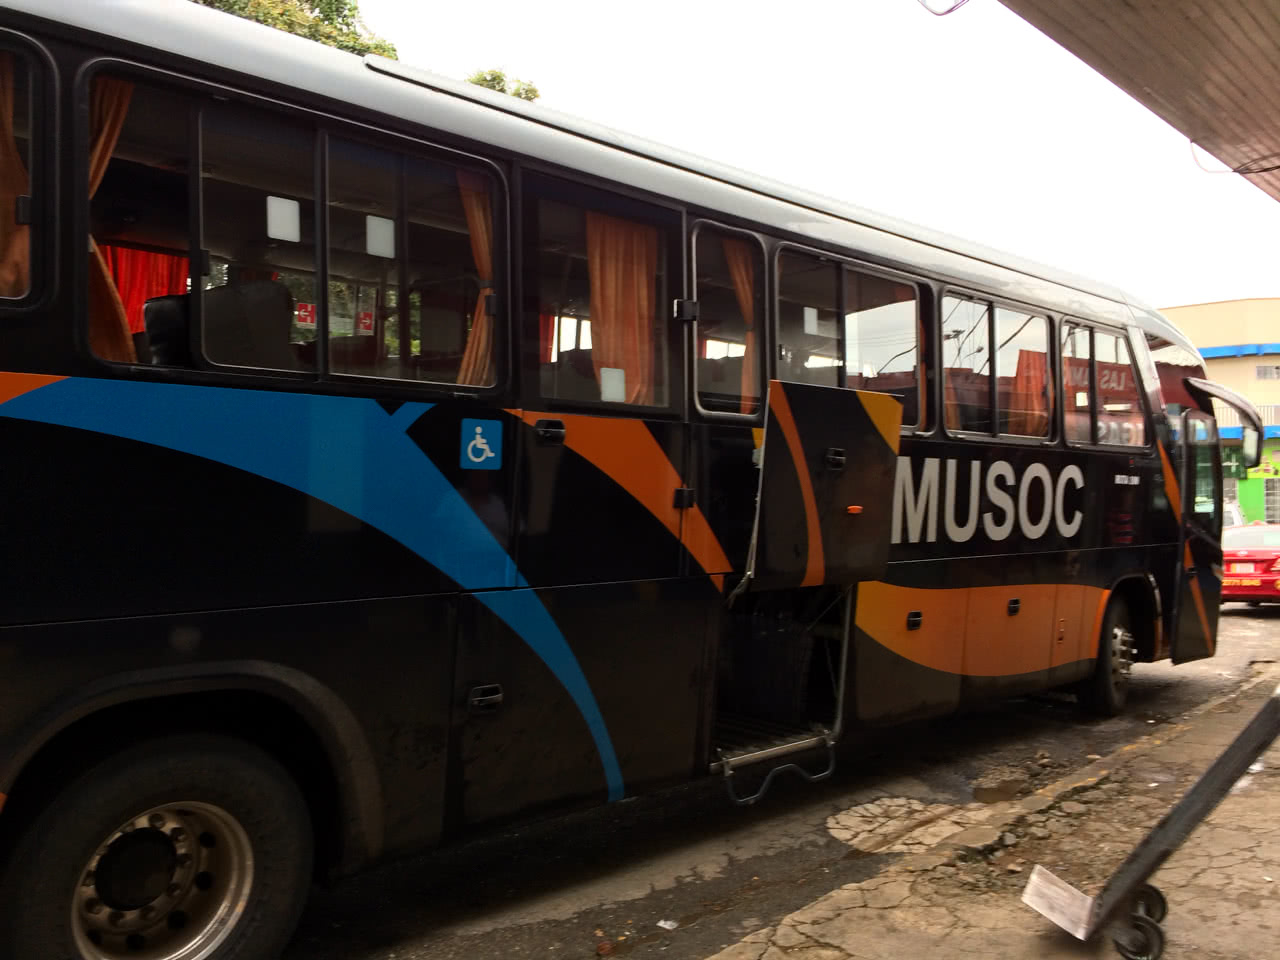 our favorite bus_The MUSOC.jpg